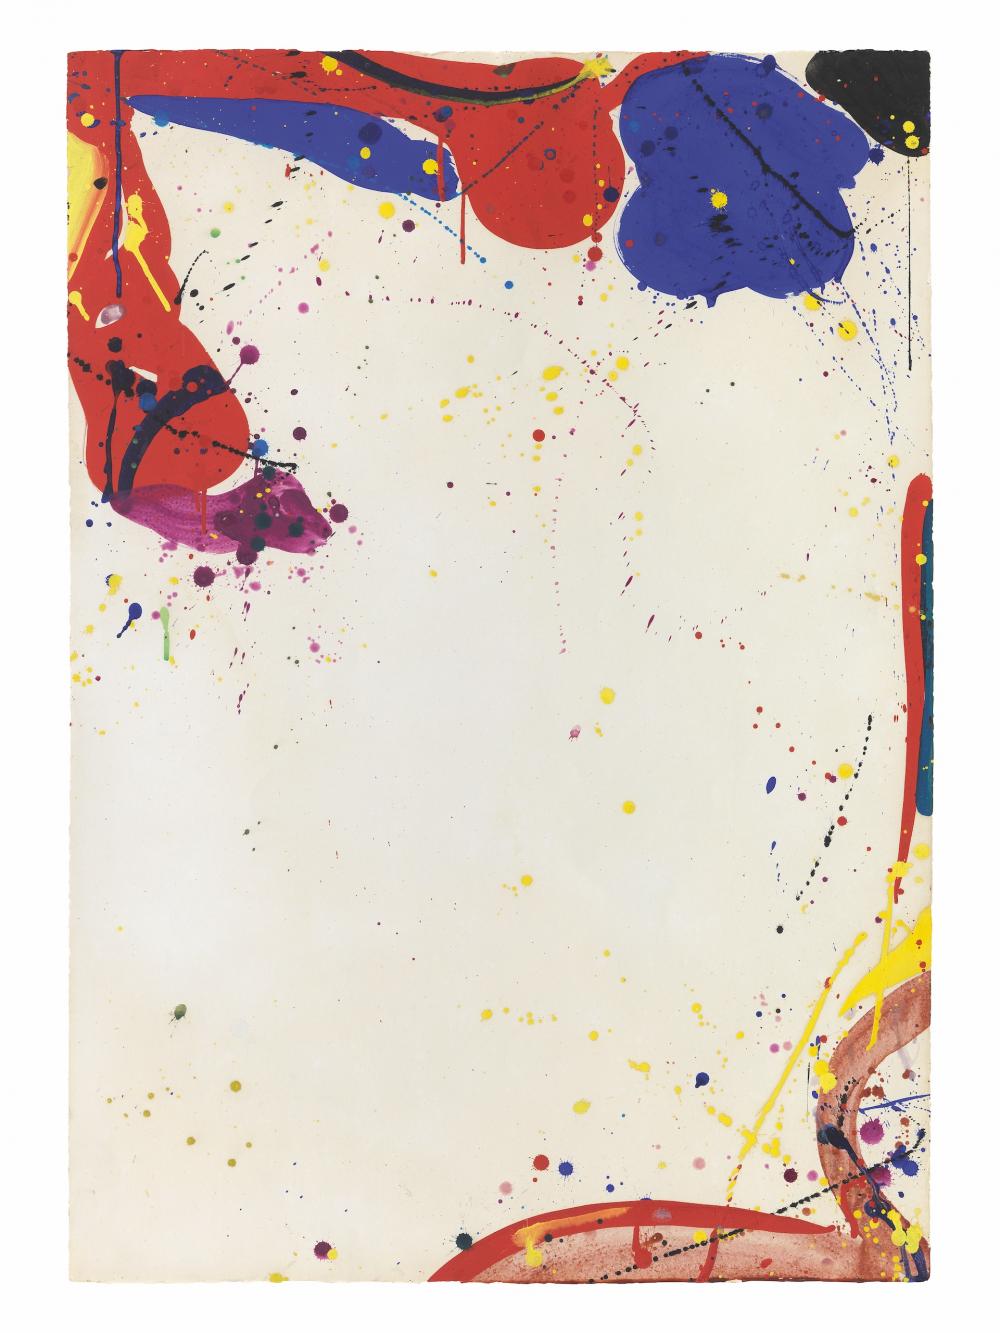 Sam Francis (1923-1994) | Untitled, 1965, Acryl auf Papier, 90 x 63 cm